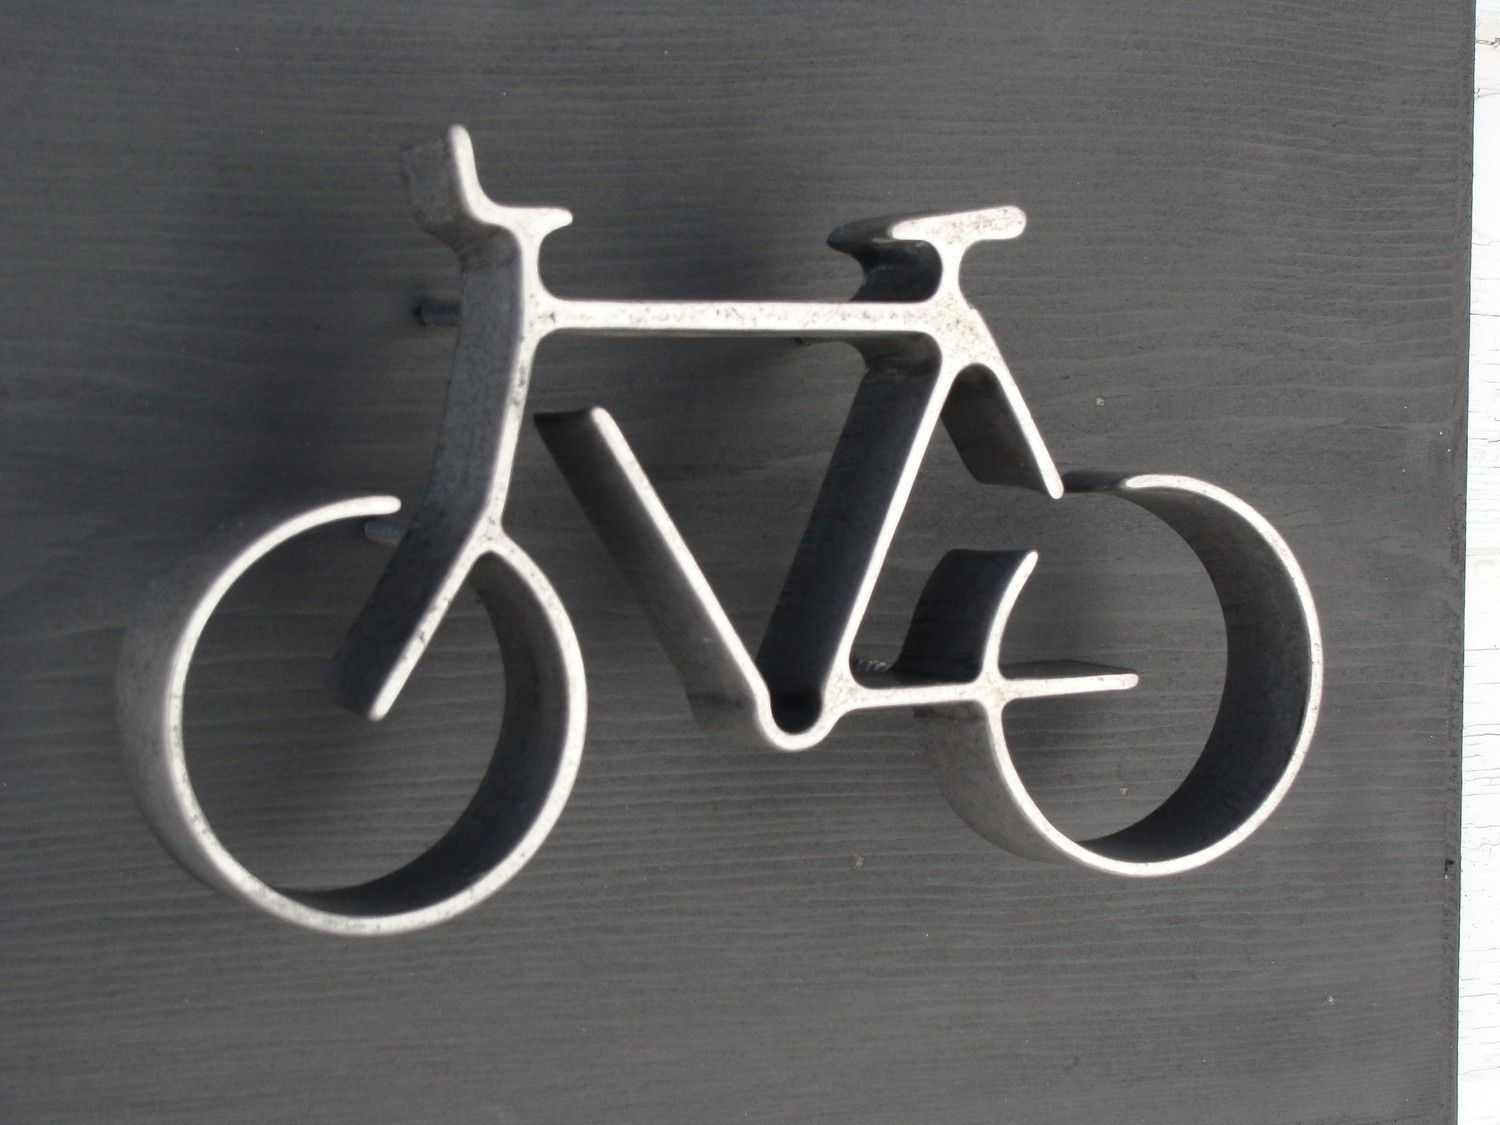 Metal Bicycle Wall Decor, Bike Wall Art, Home Decor Bicycle Intended For Bike Wall Decor (View 22 of 30)